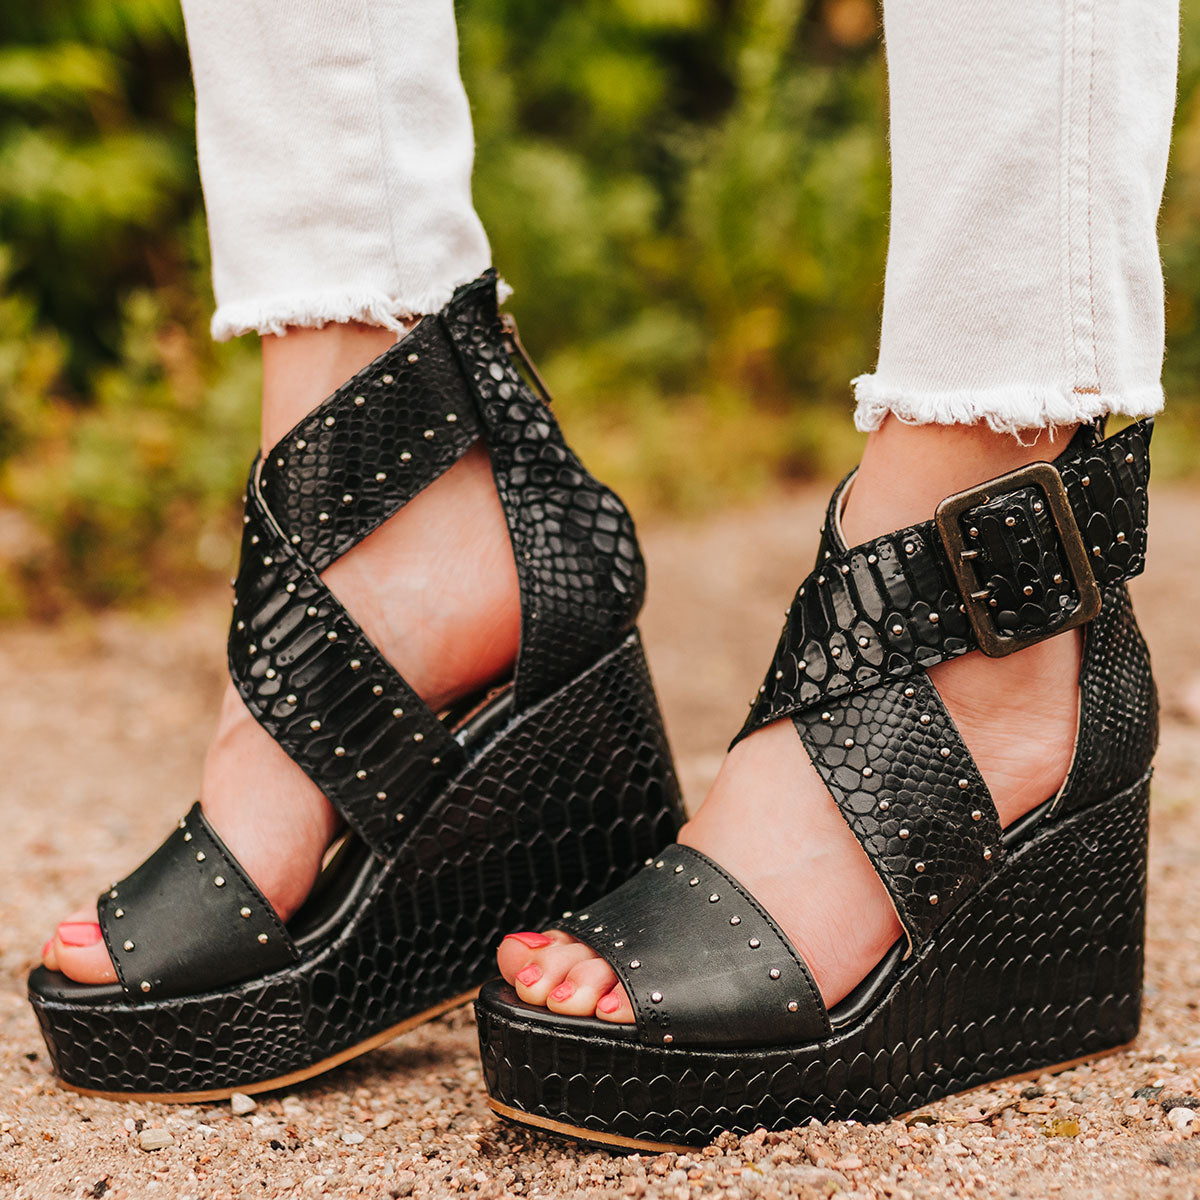 FREEBIRD women's Terra black snake platform sandal with wedge heel, an adjustable ankle strap, and stud detailing